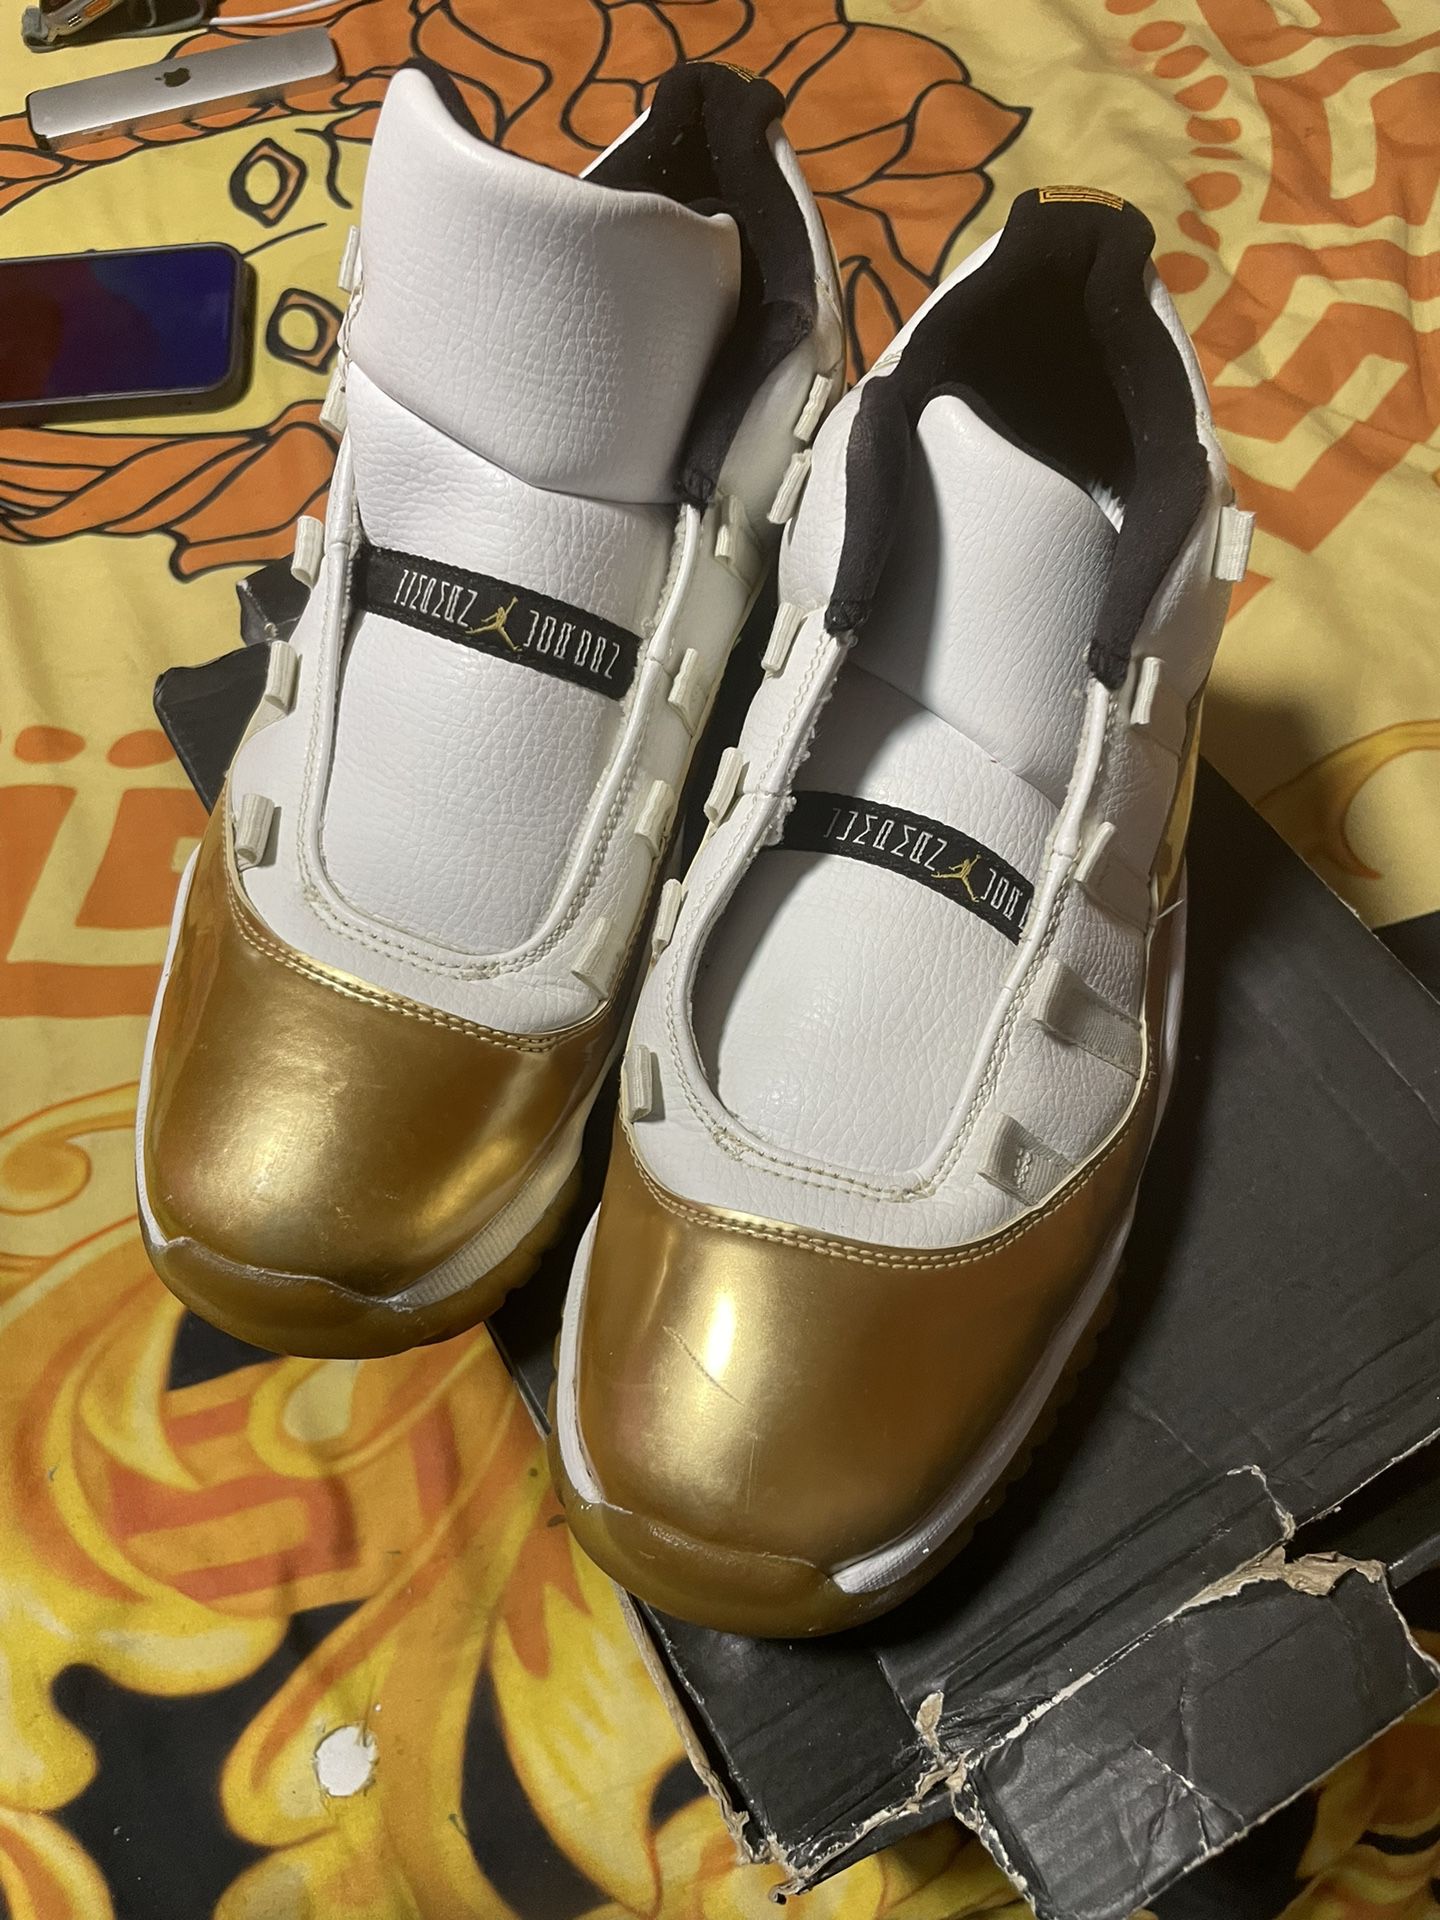  Gold & White Jordan’s Size 10  1/2